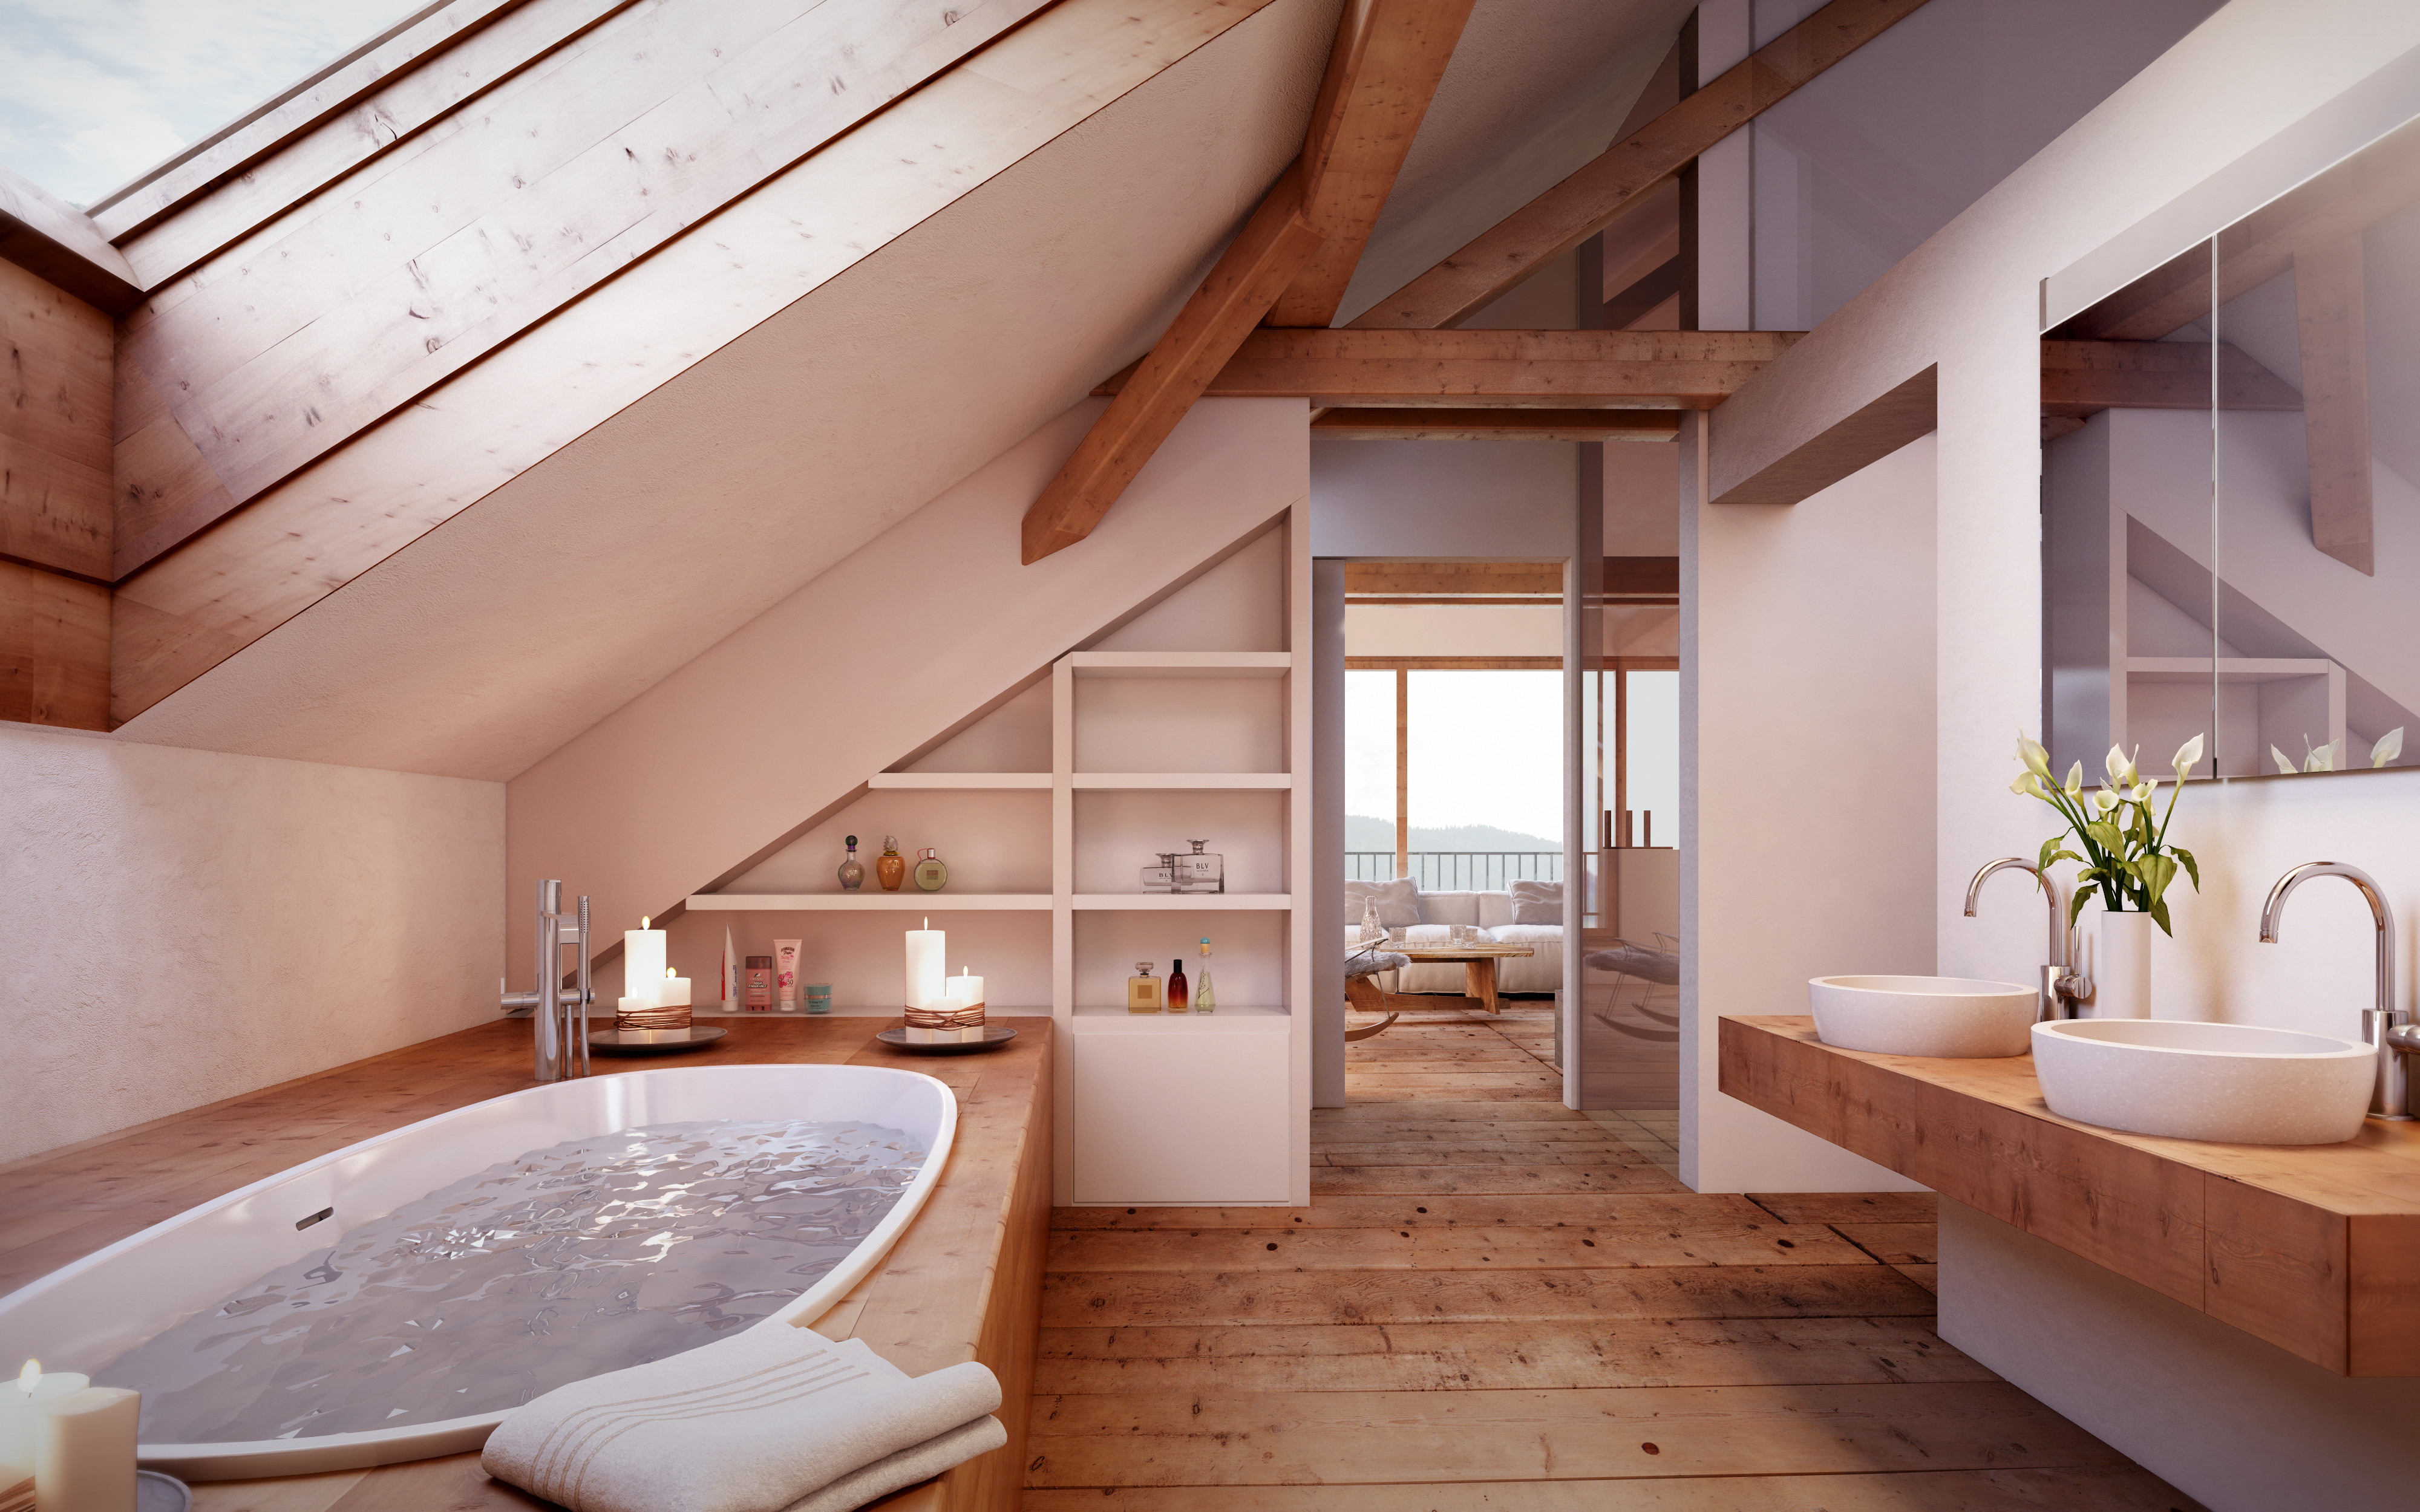 A-vast-and-glamorous-attic-bathroom